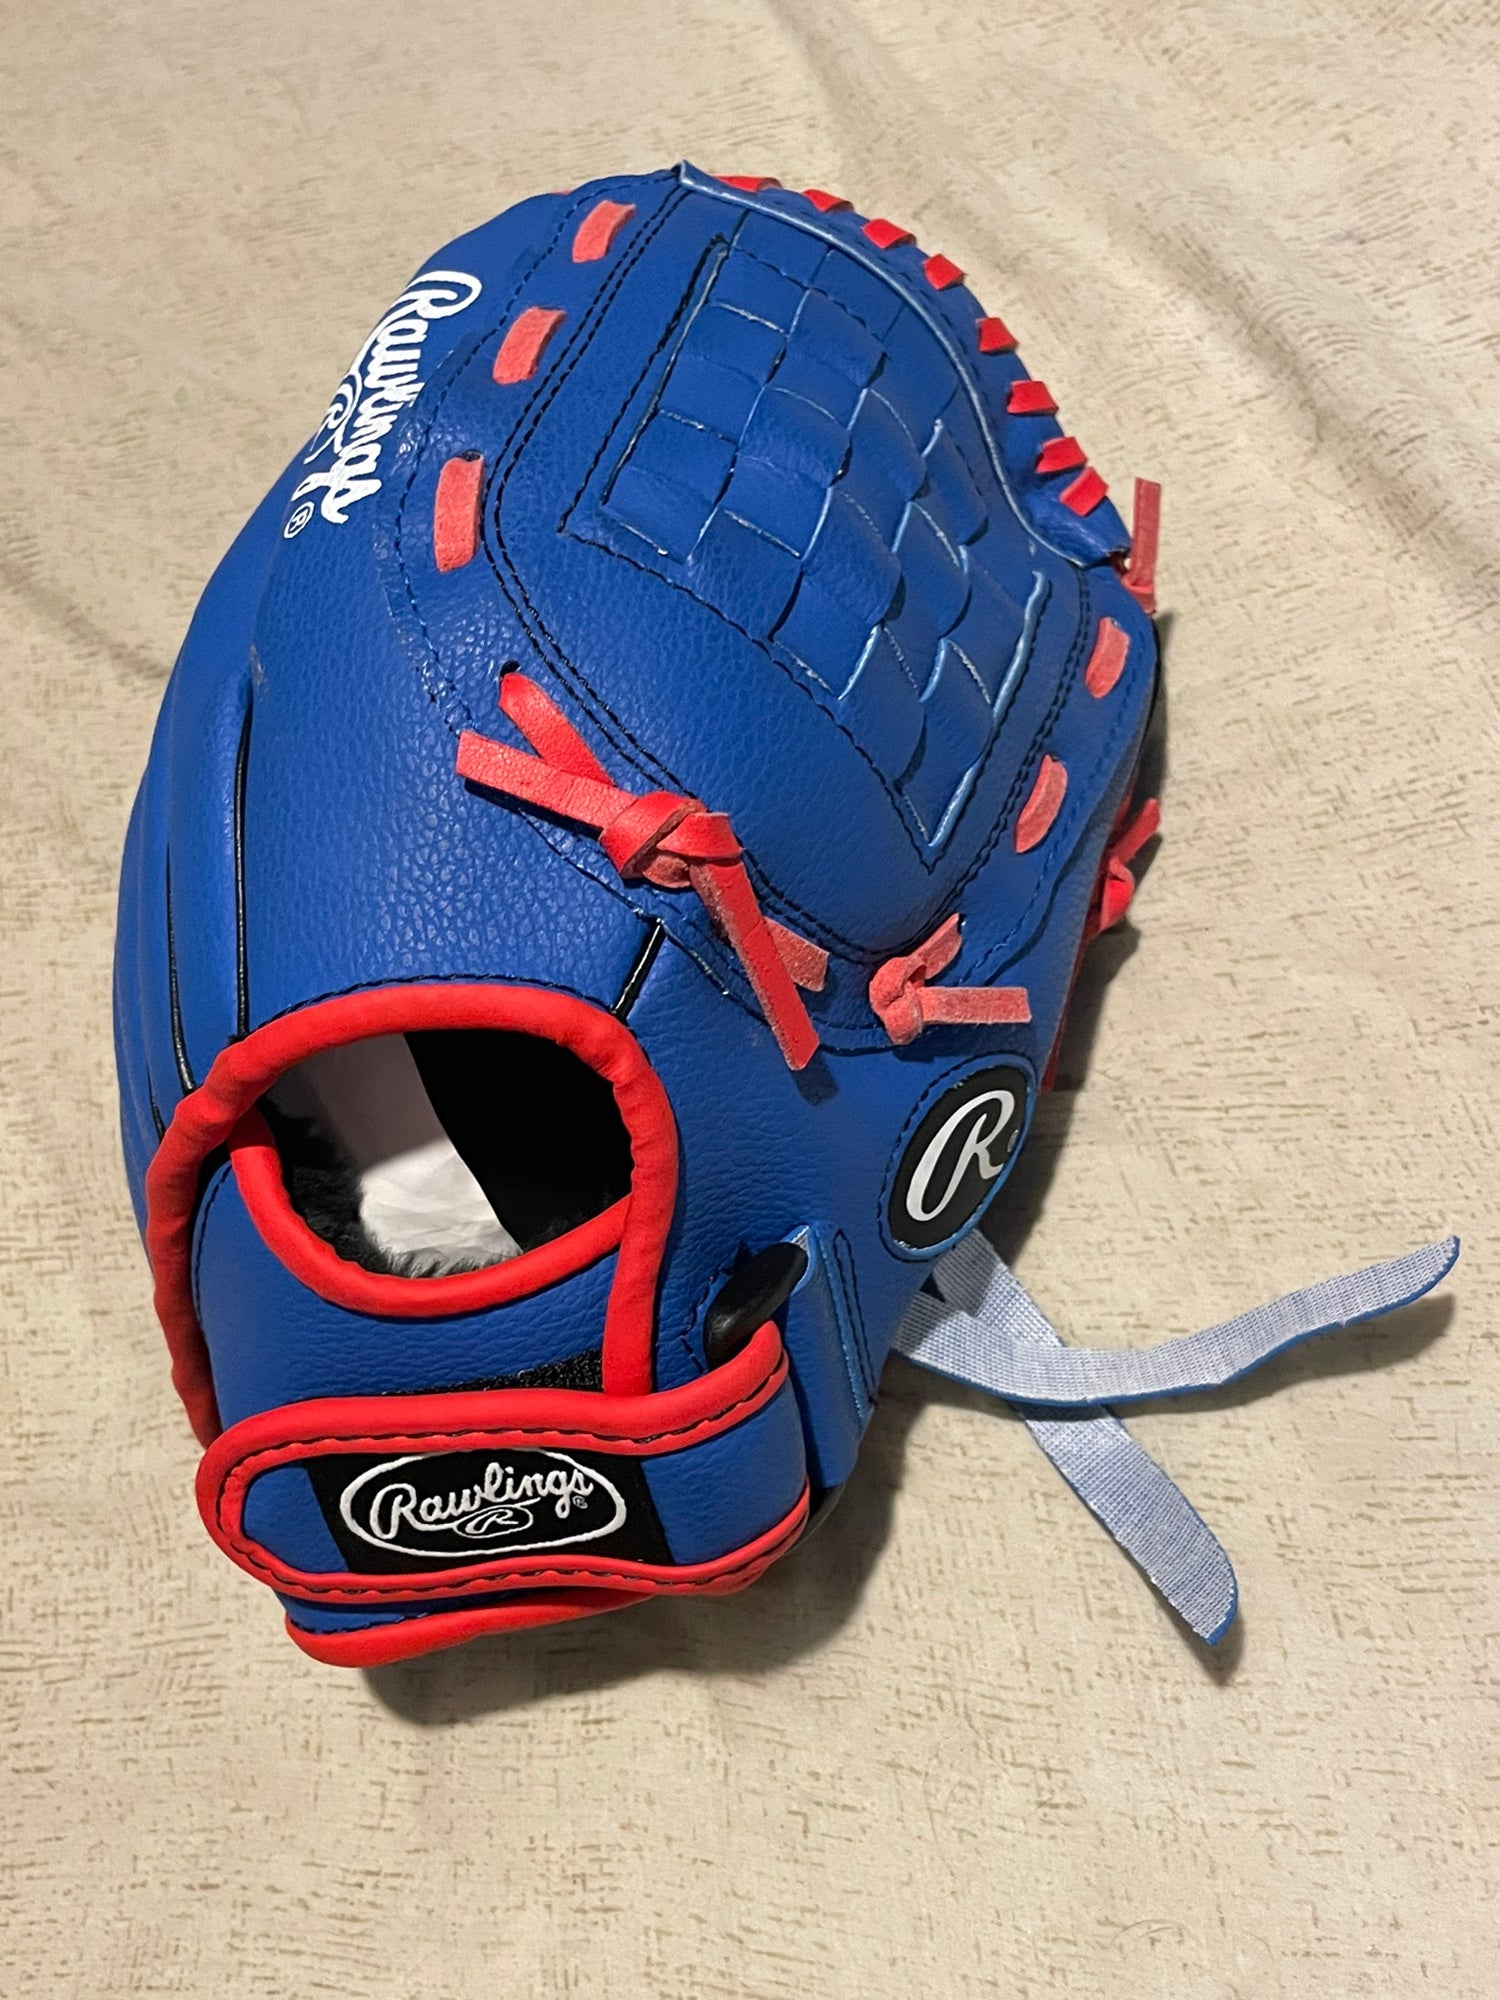 Rawlings PL11P 11" Troy Tulowitzki Baseball Glove Blue Red Performance  RHT